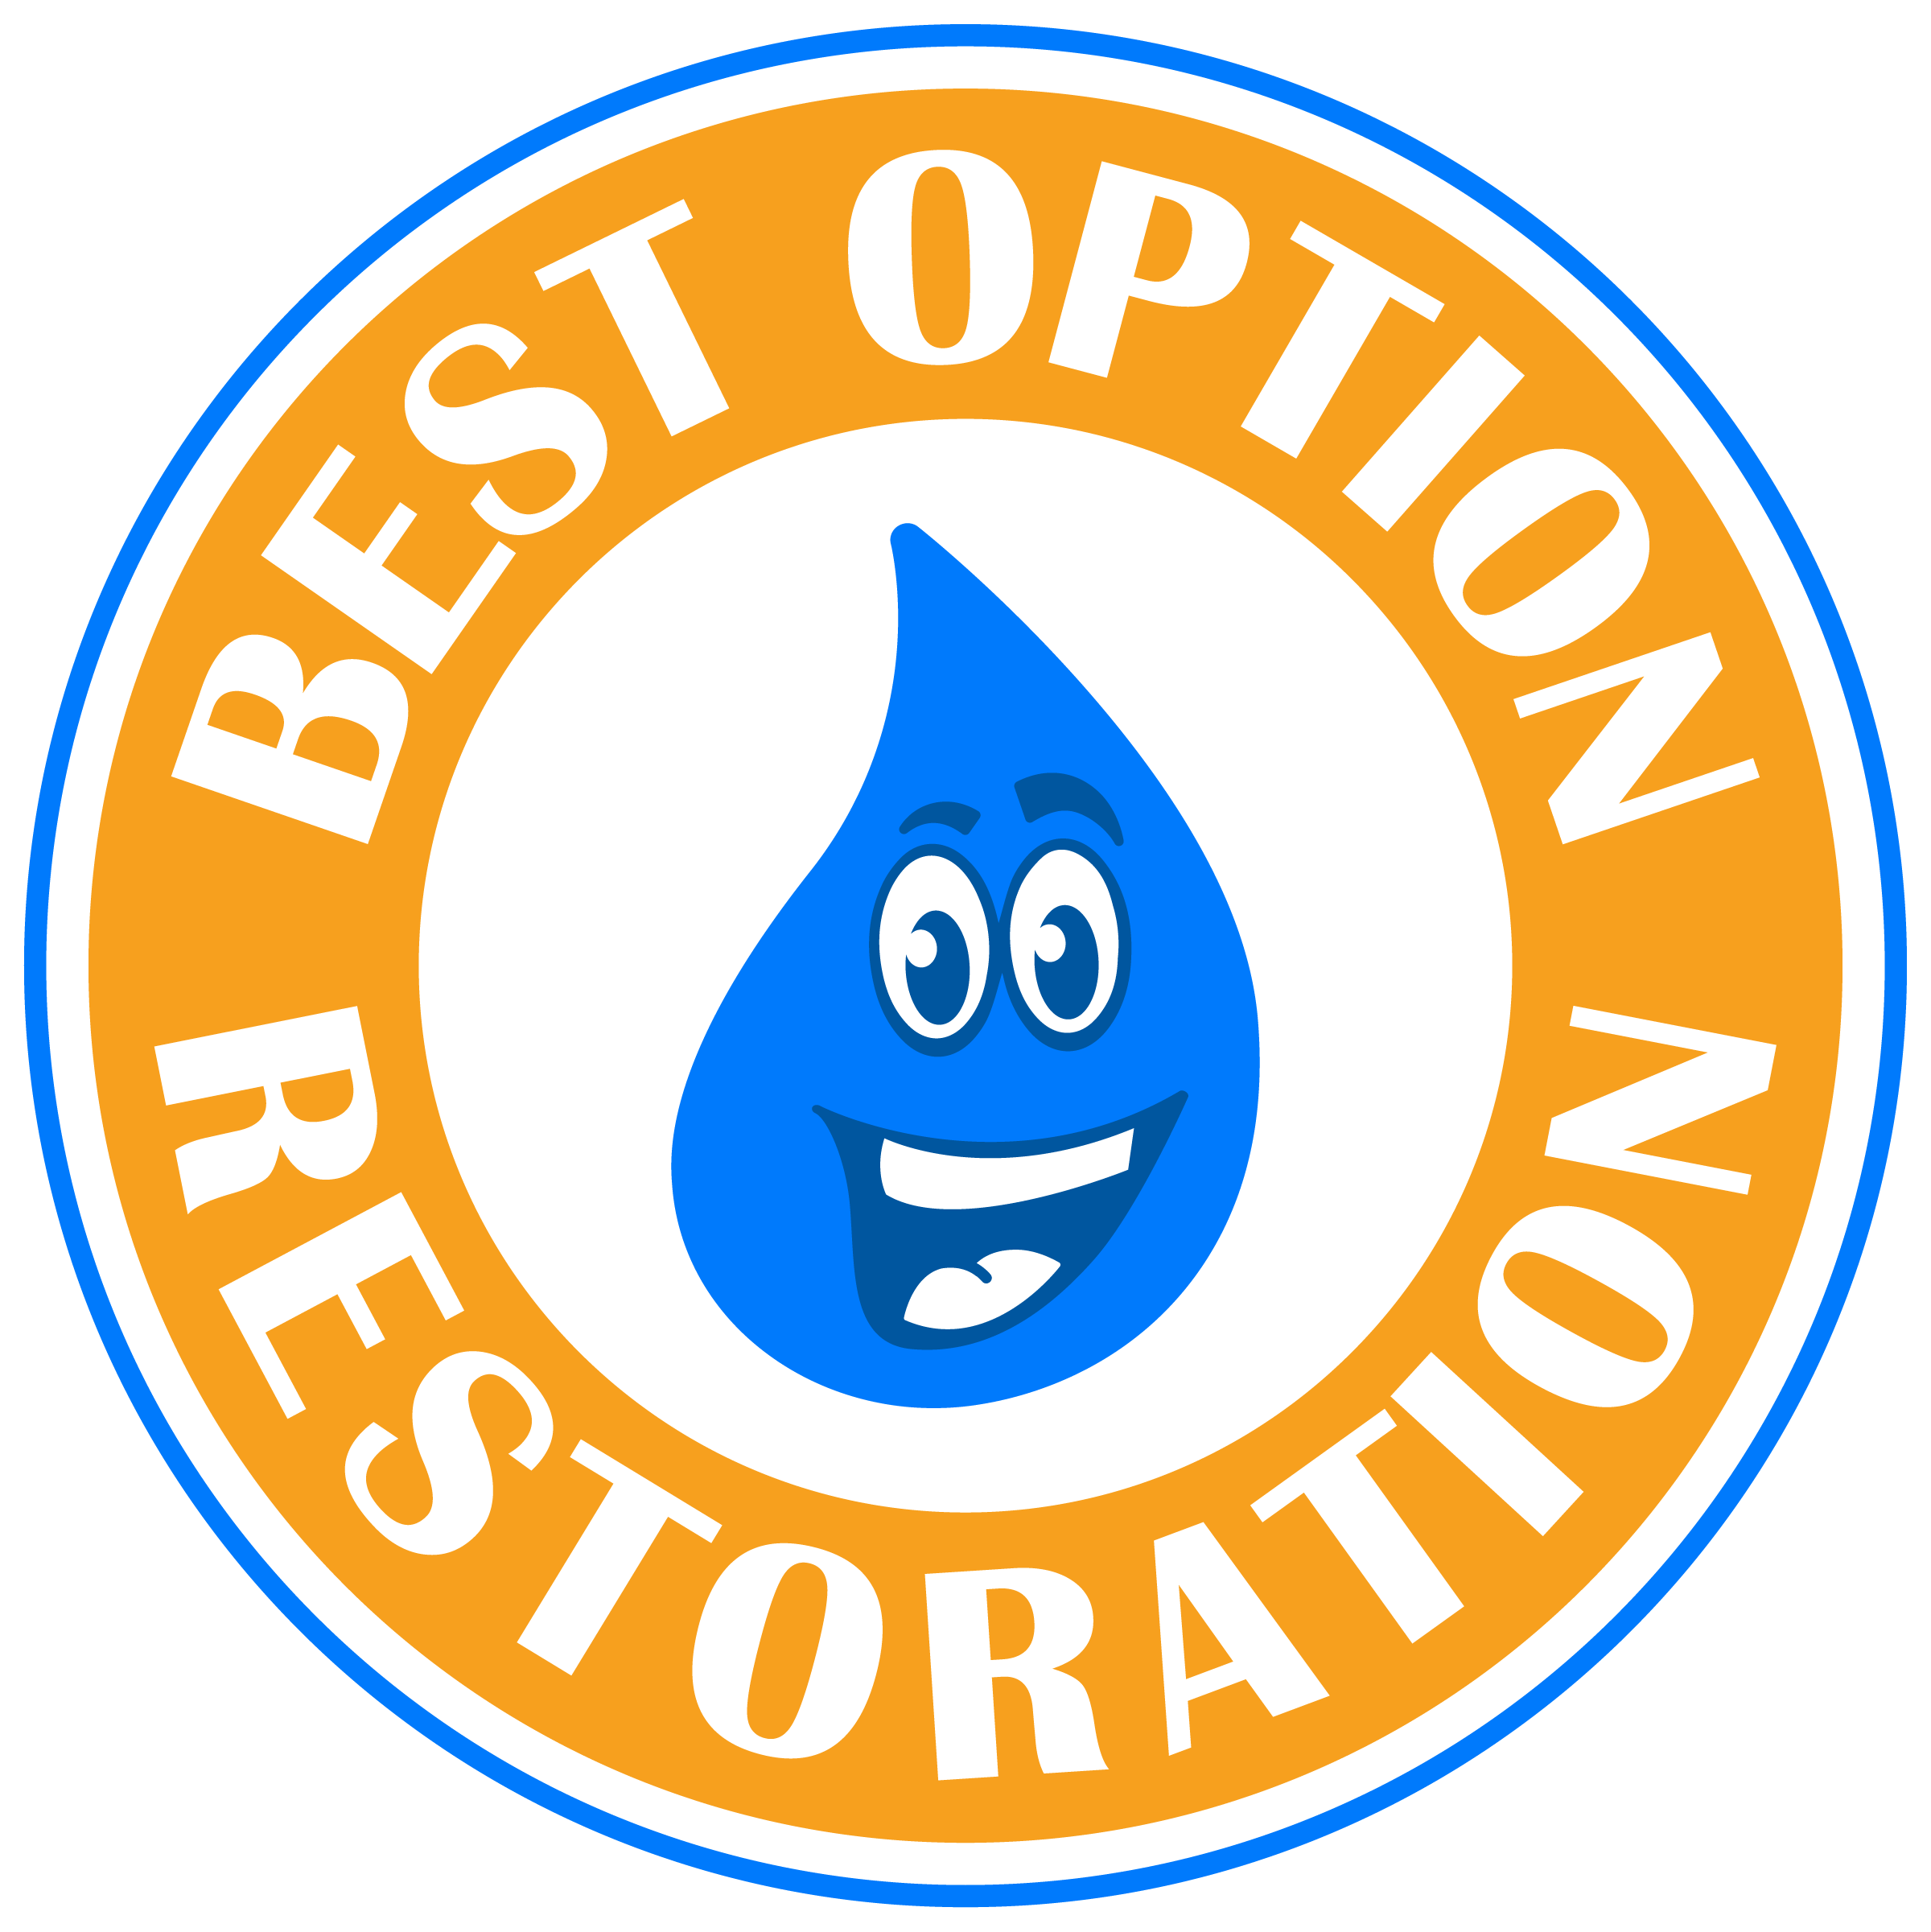 Best Option Restoration Logo